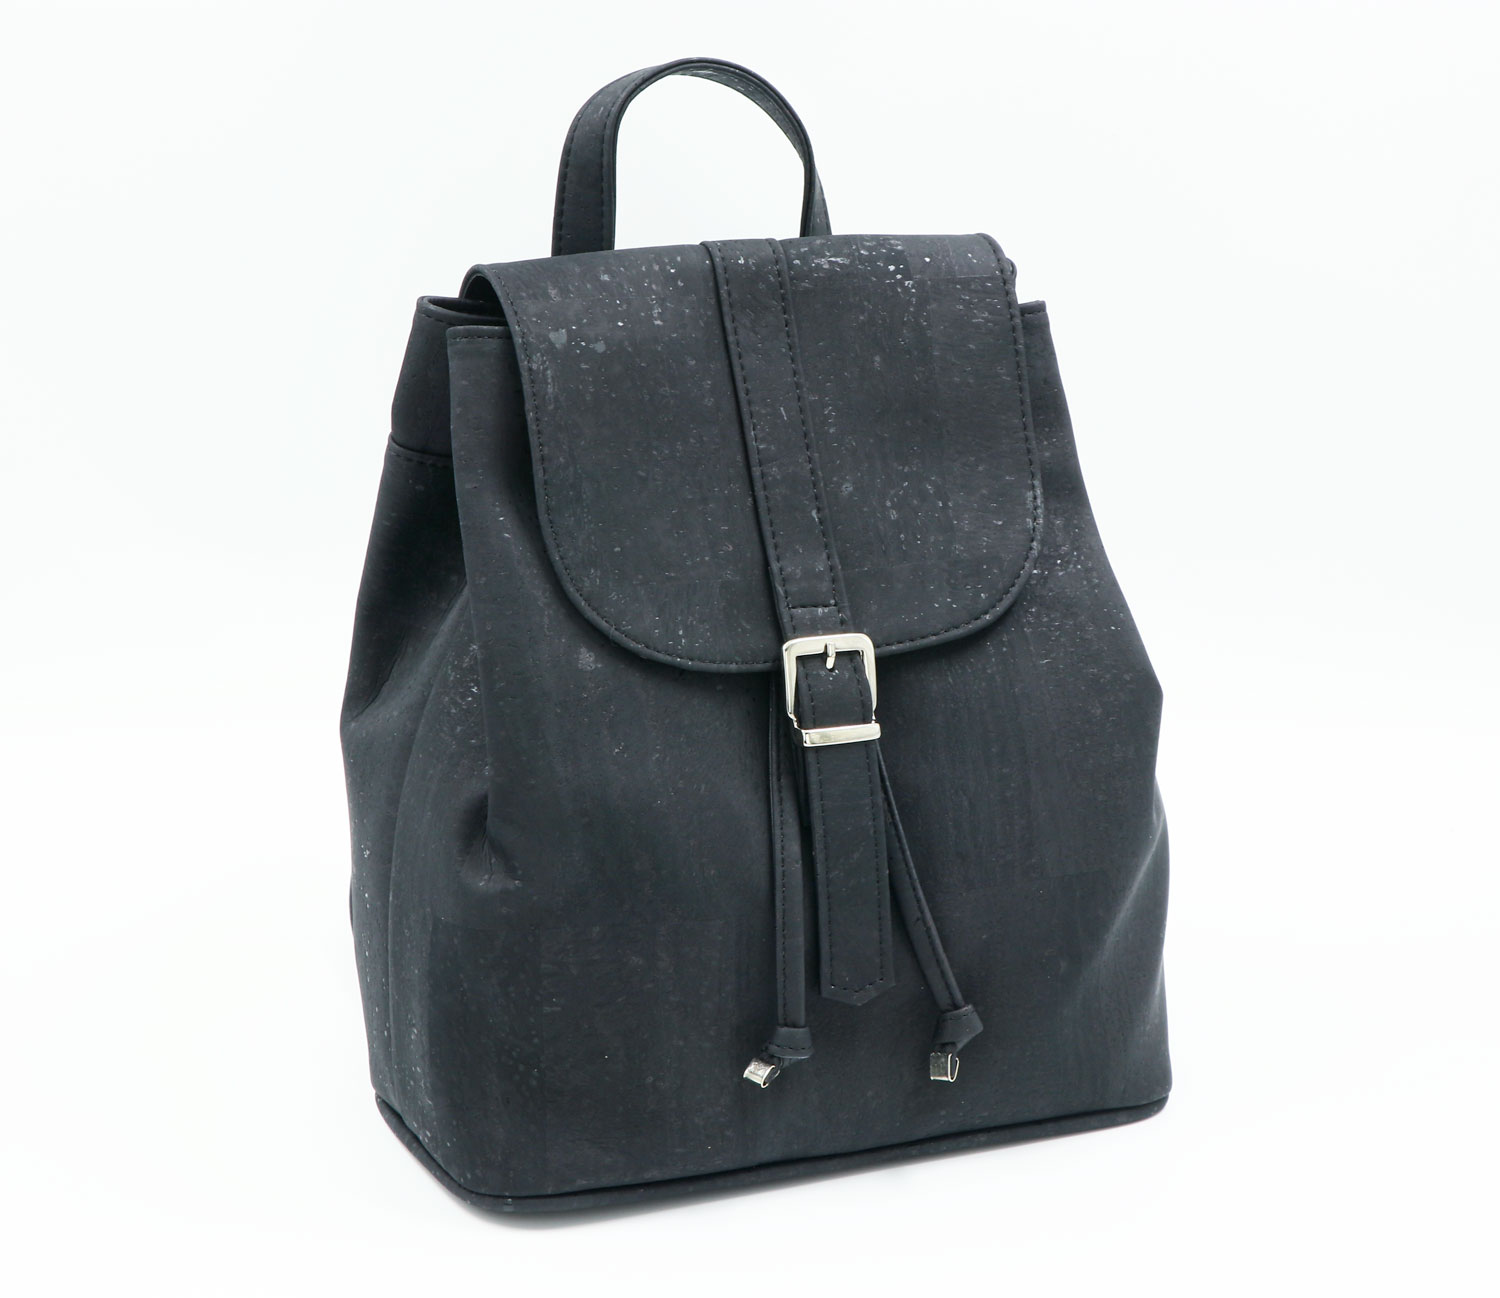 Amazon.com: Gift for her : cork Backpack Boho bohemian bag cork ecofriendly  vegan : Handmade Products